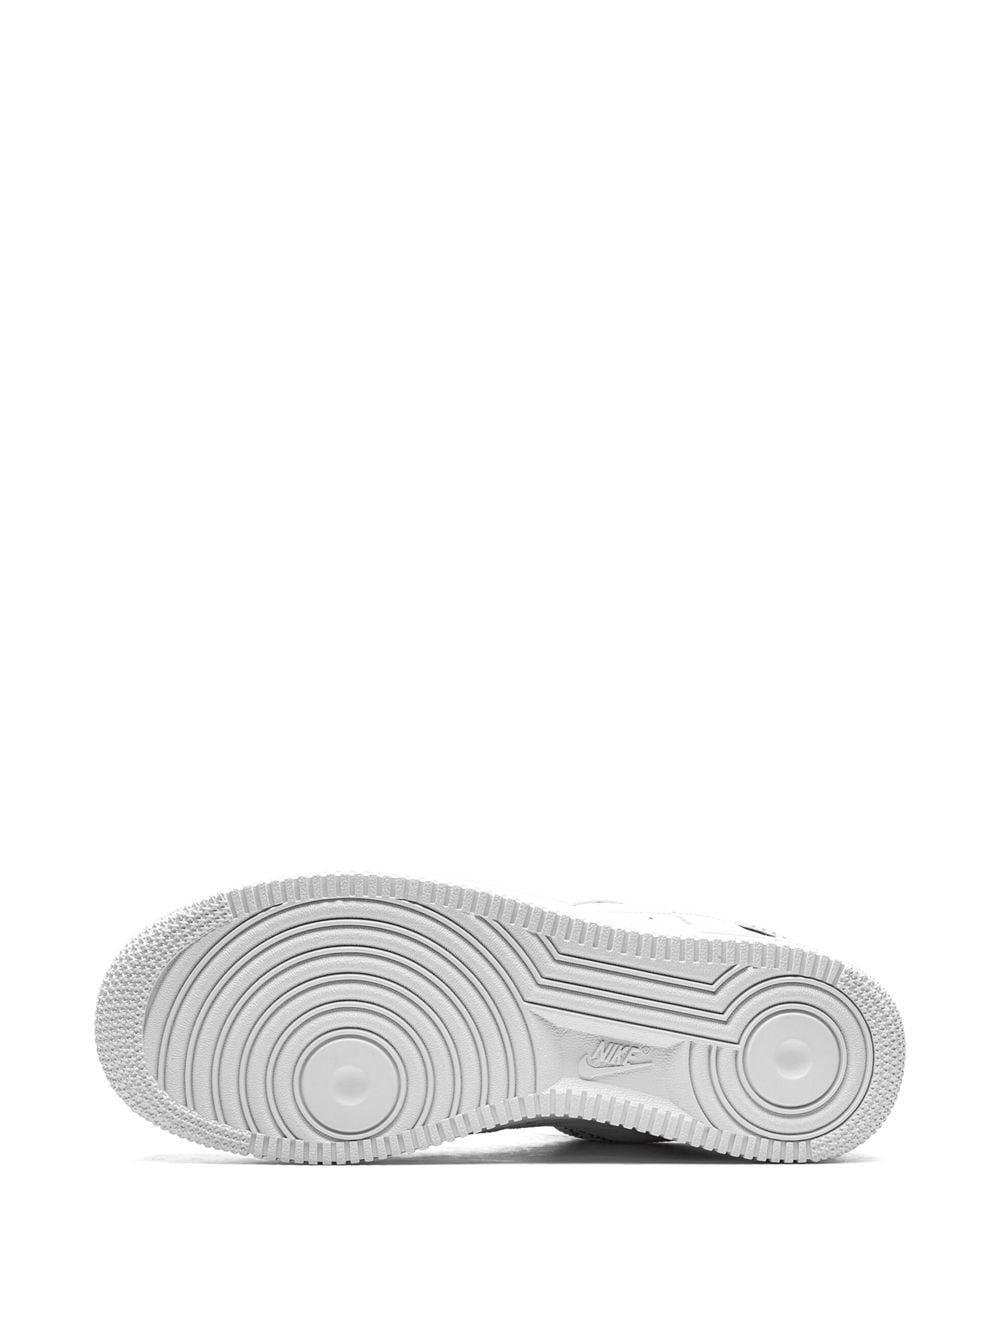 Louis Vuitton x Nike Air Force 1 White | Size 8.5